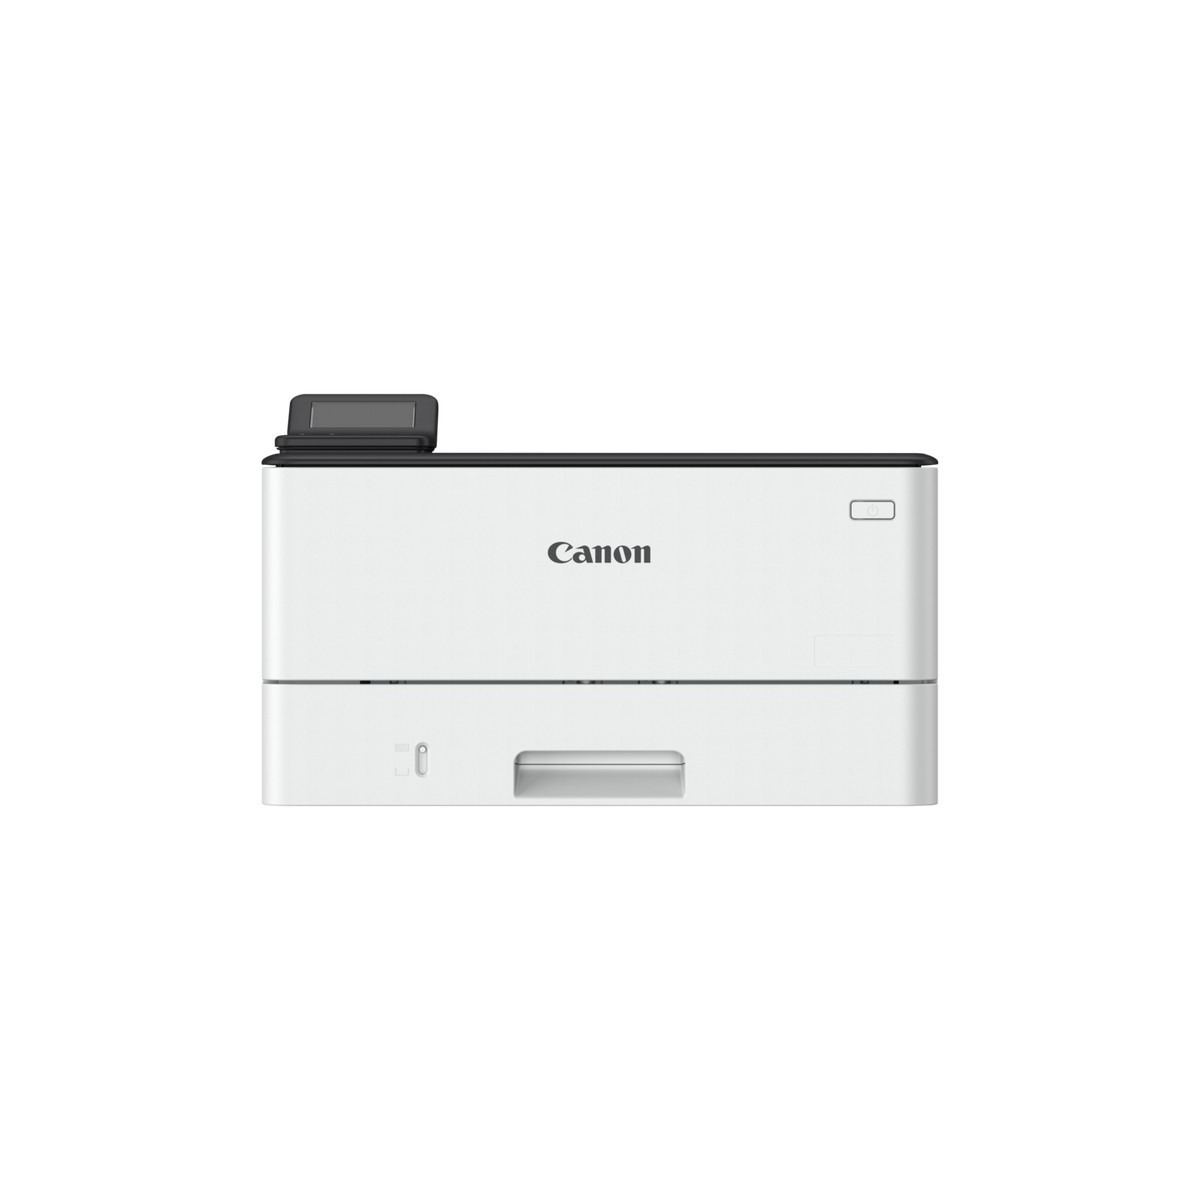 Canon i-SENSYS LBP243dw - Laser - 1200 x 1200 DPI - A4 - 36 ppm - Duplex printing - Black - White